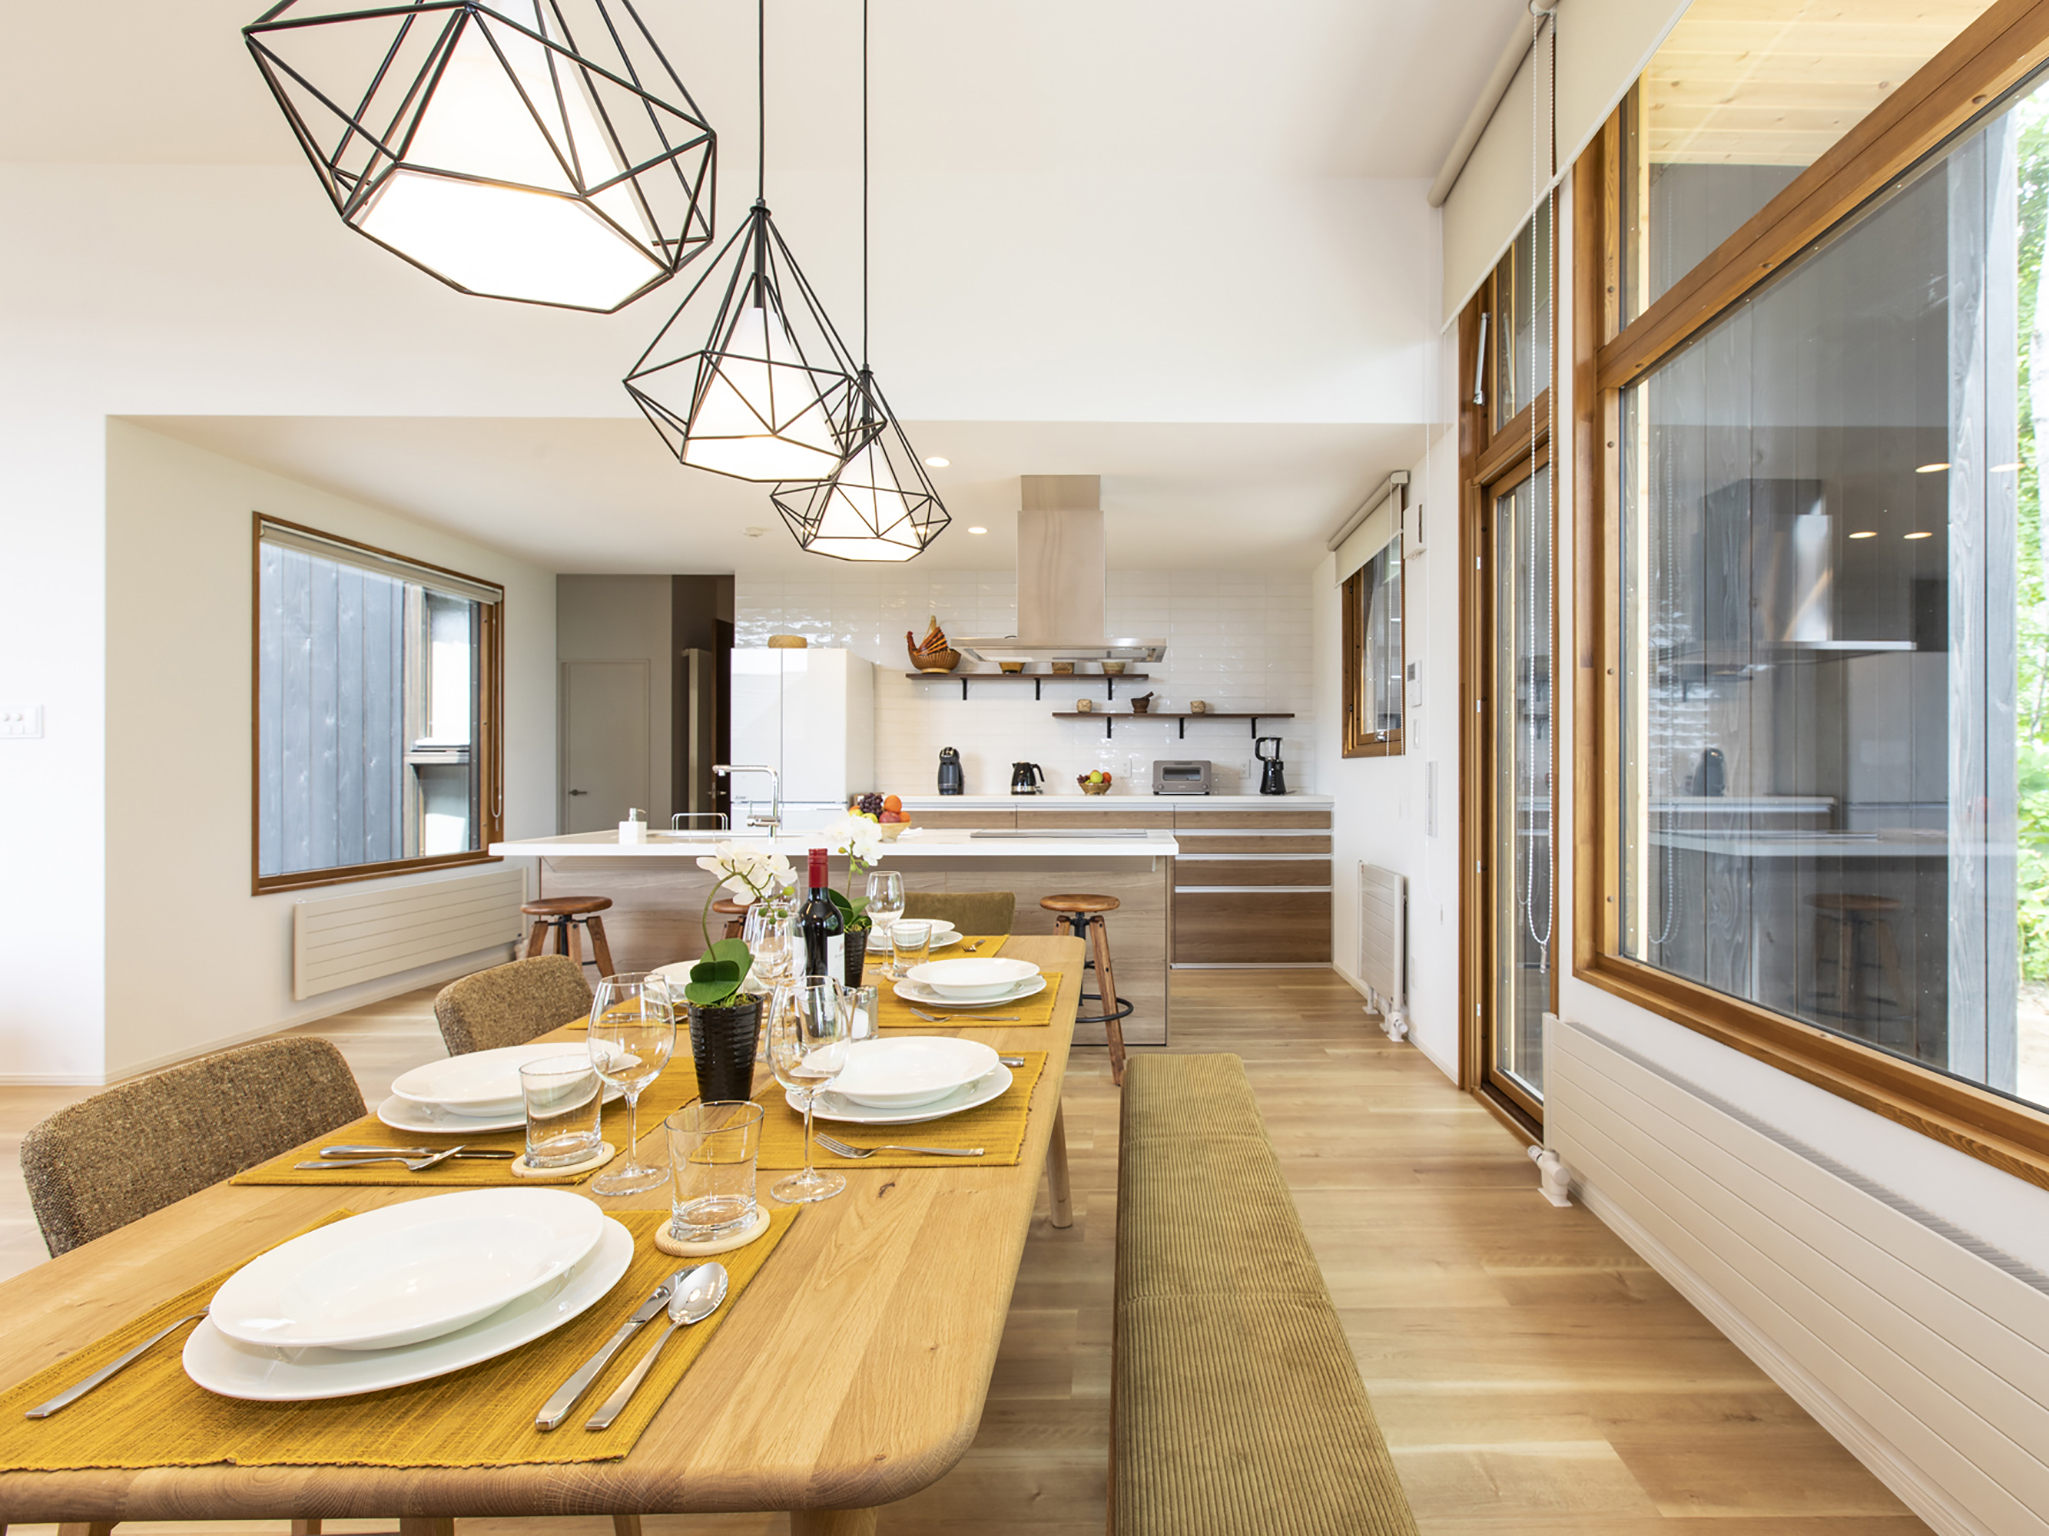 Birchwood Chalet - Kitchen and dining area design